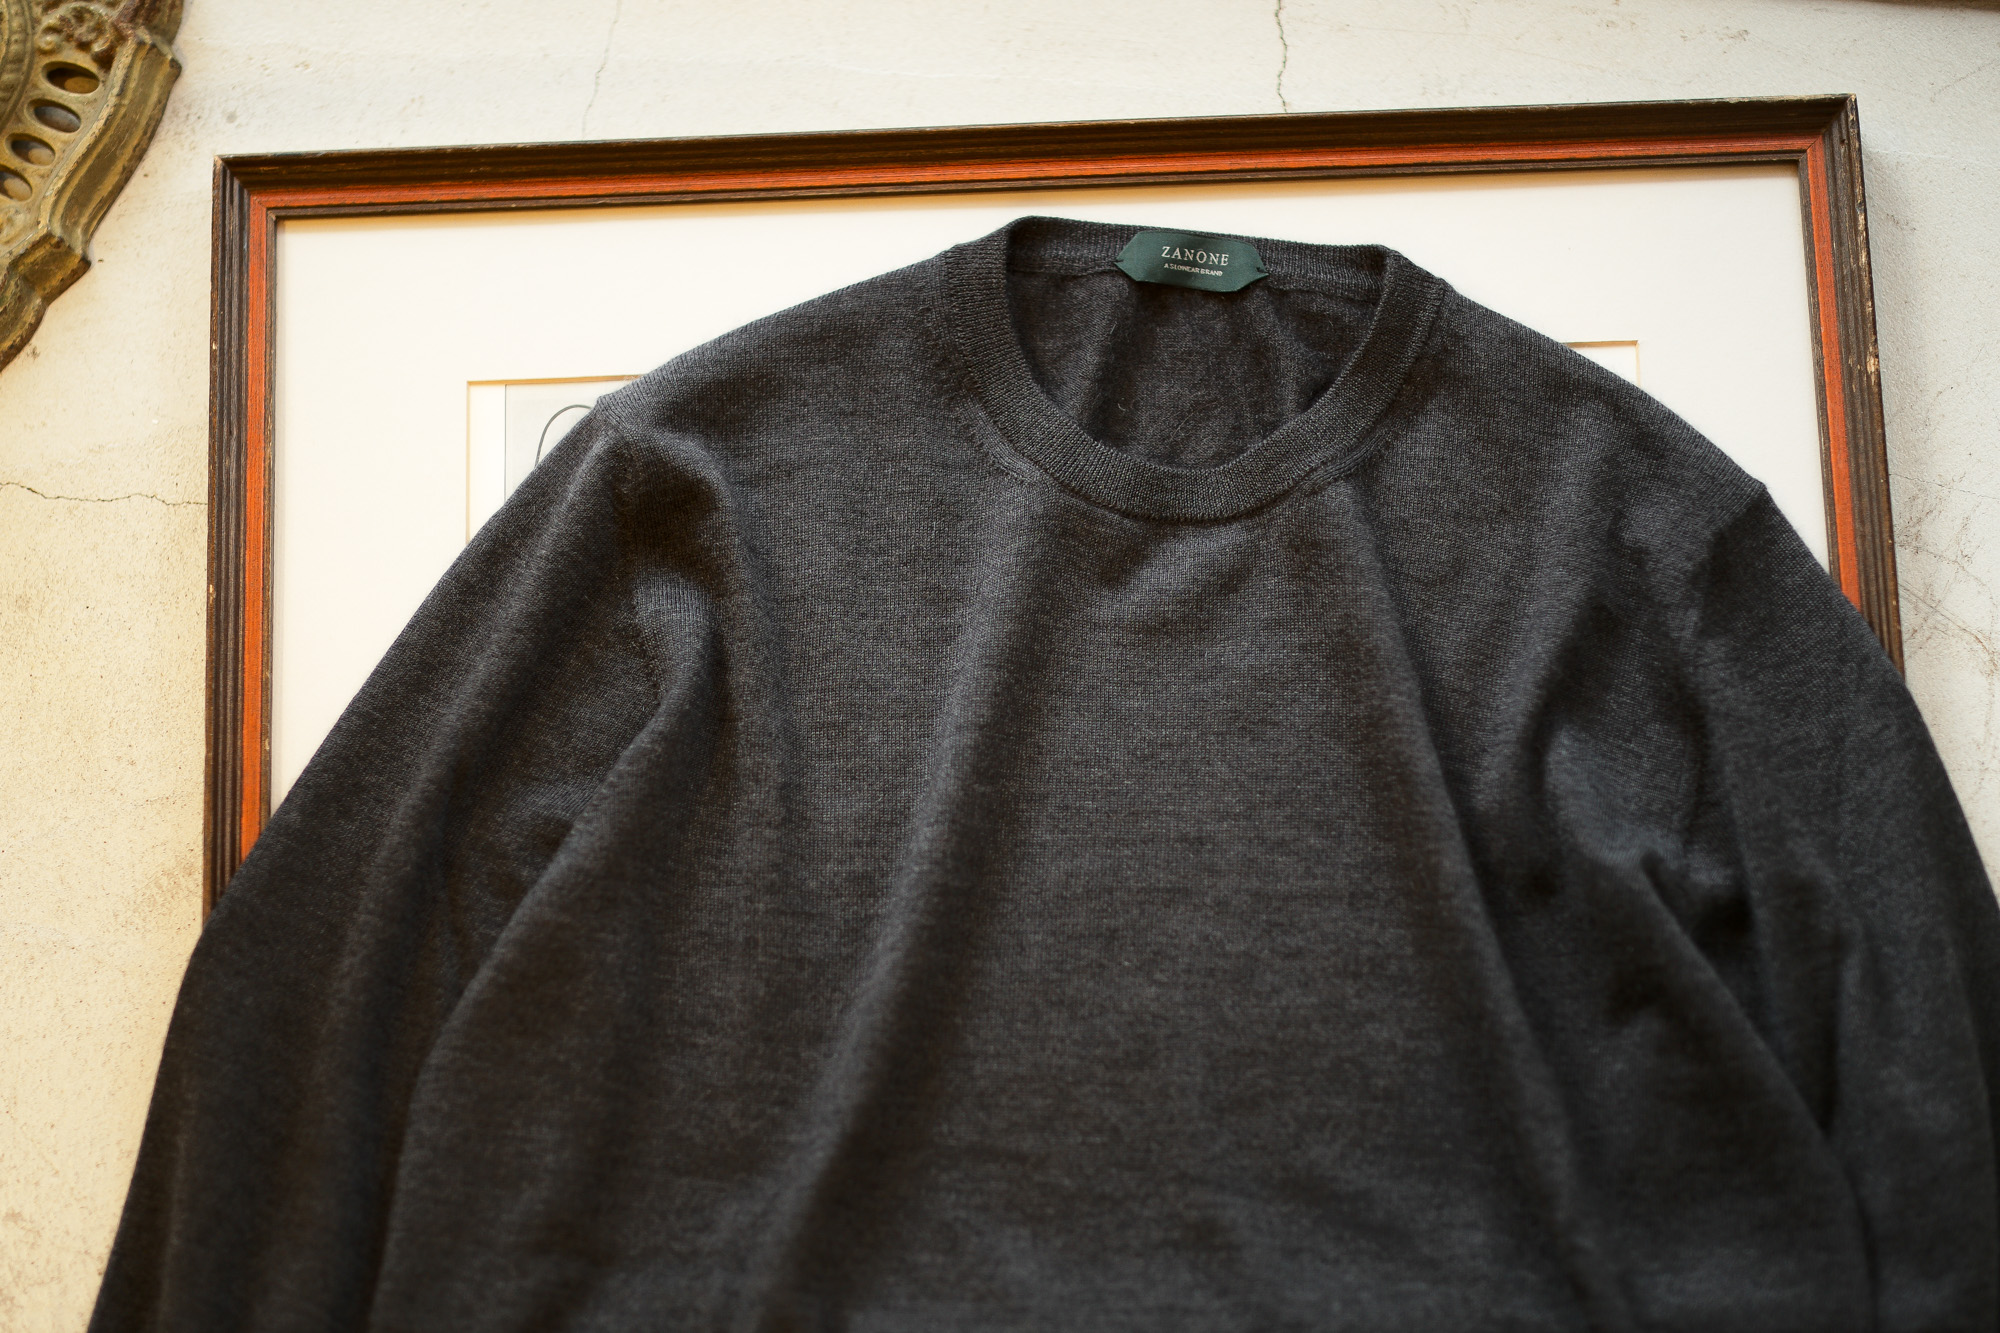 ZANONE(ザノーネ) Cashmere Crew Neck Sweater (カシミア クルーネック セーター) 18ゲージ カシミア ニット セーター CHARCOAL (チャコール・Z4944) made in italy (イタリア製) 2019 秋冬新作 愛知 名古屋 altoediritto アルトエデリット